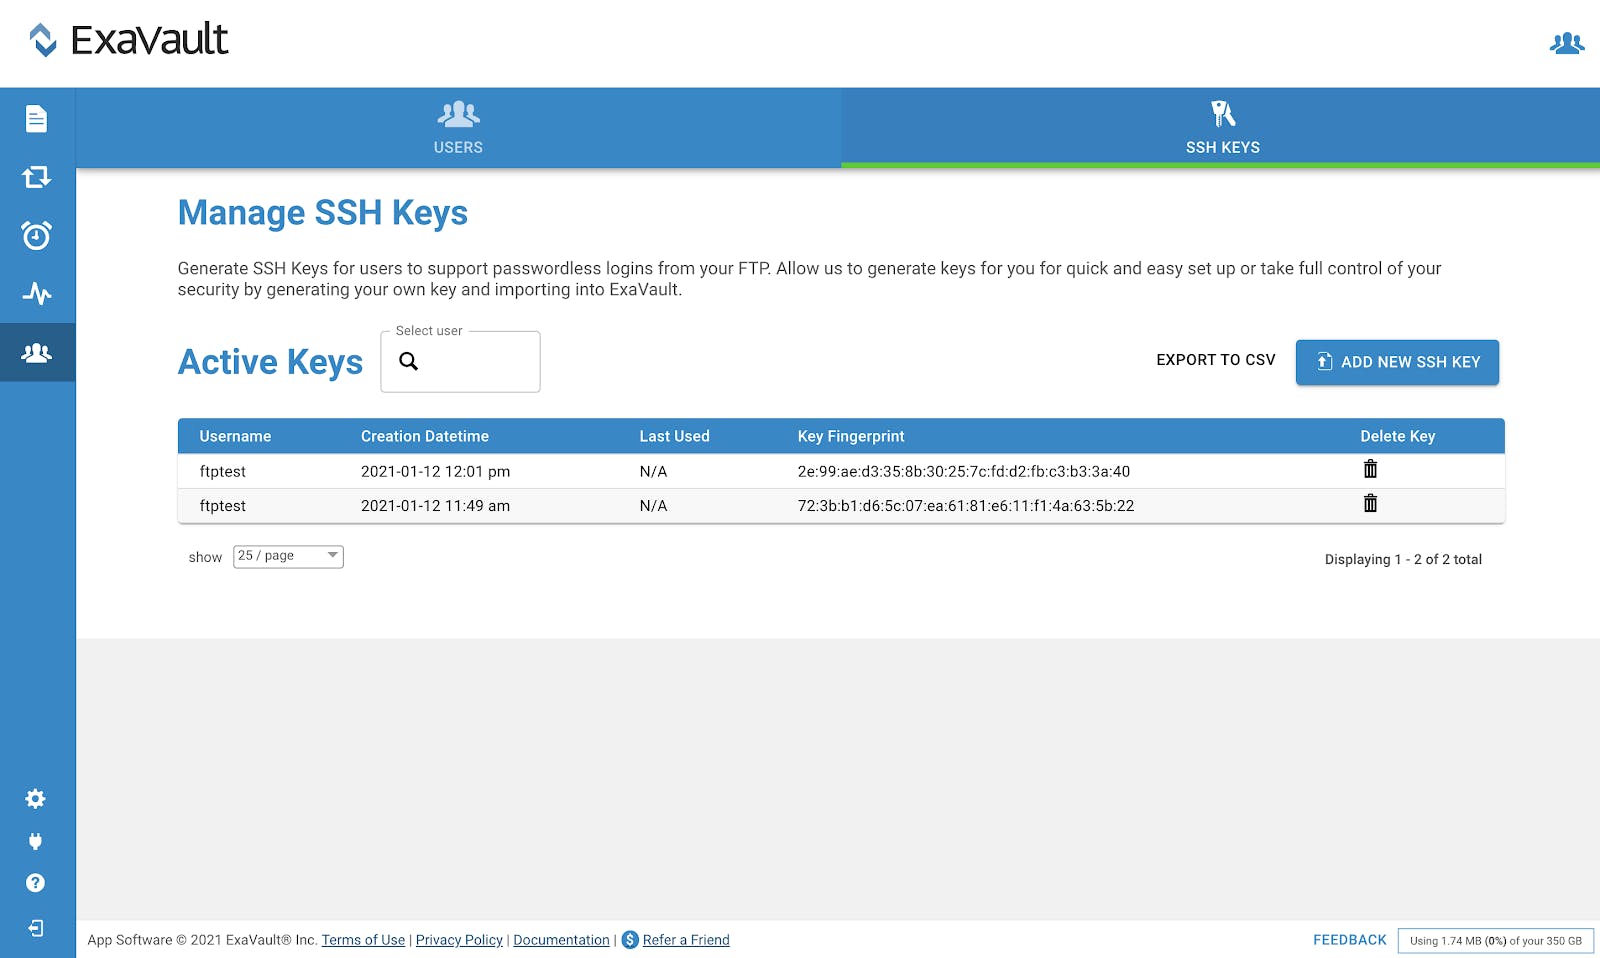 Interface for managing SSH keys in ExaVault.